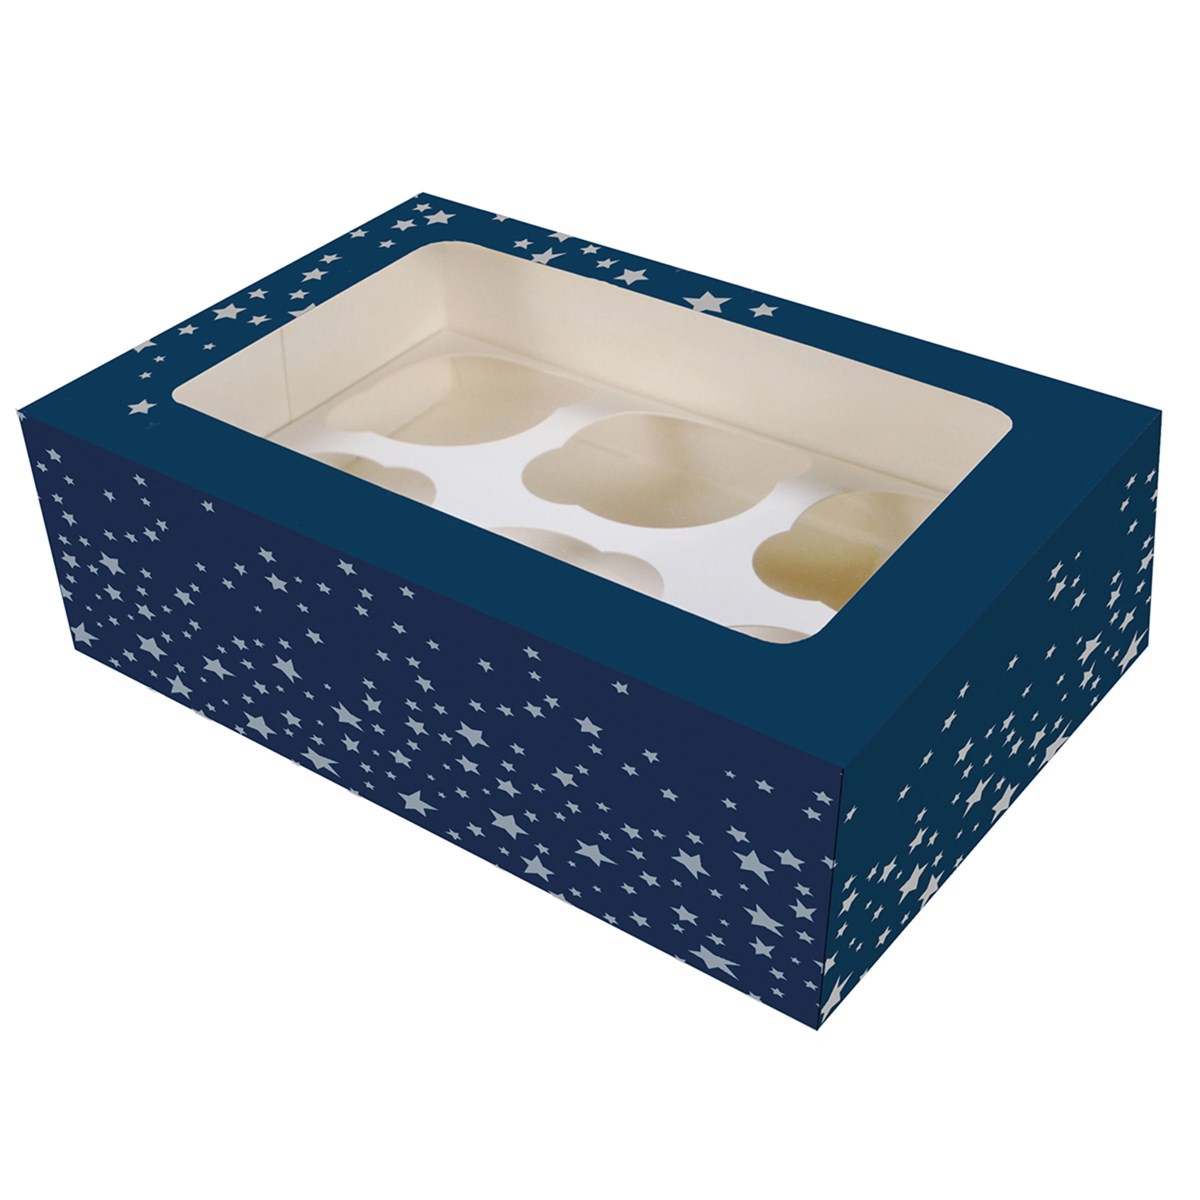 6 Cavity / Hole Starry Night Navy Blue Cupcake Box